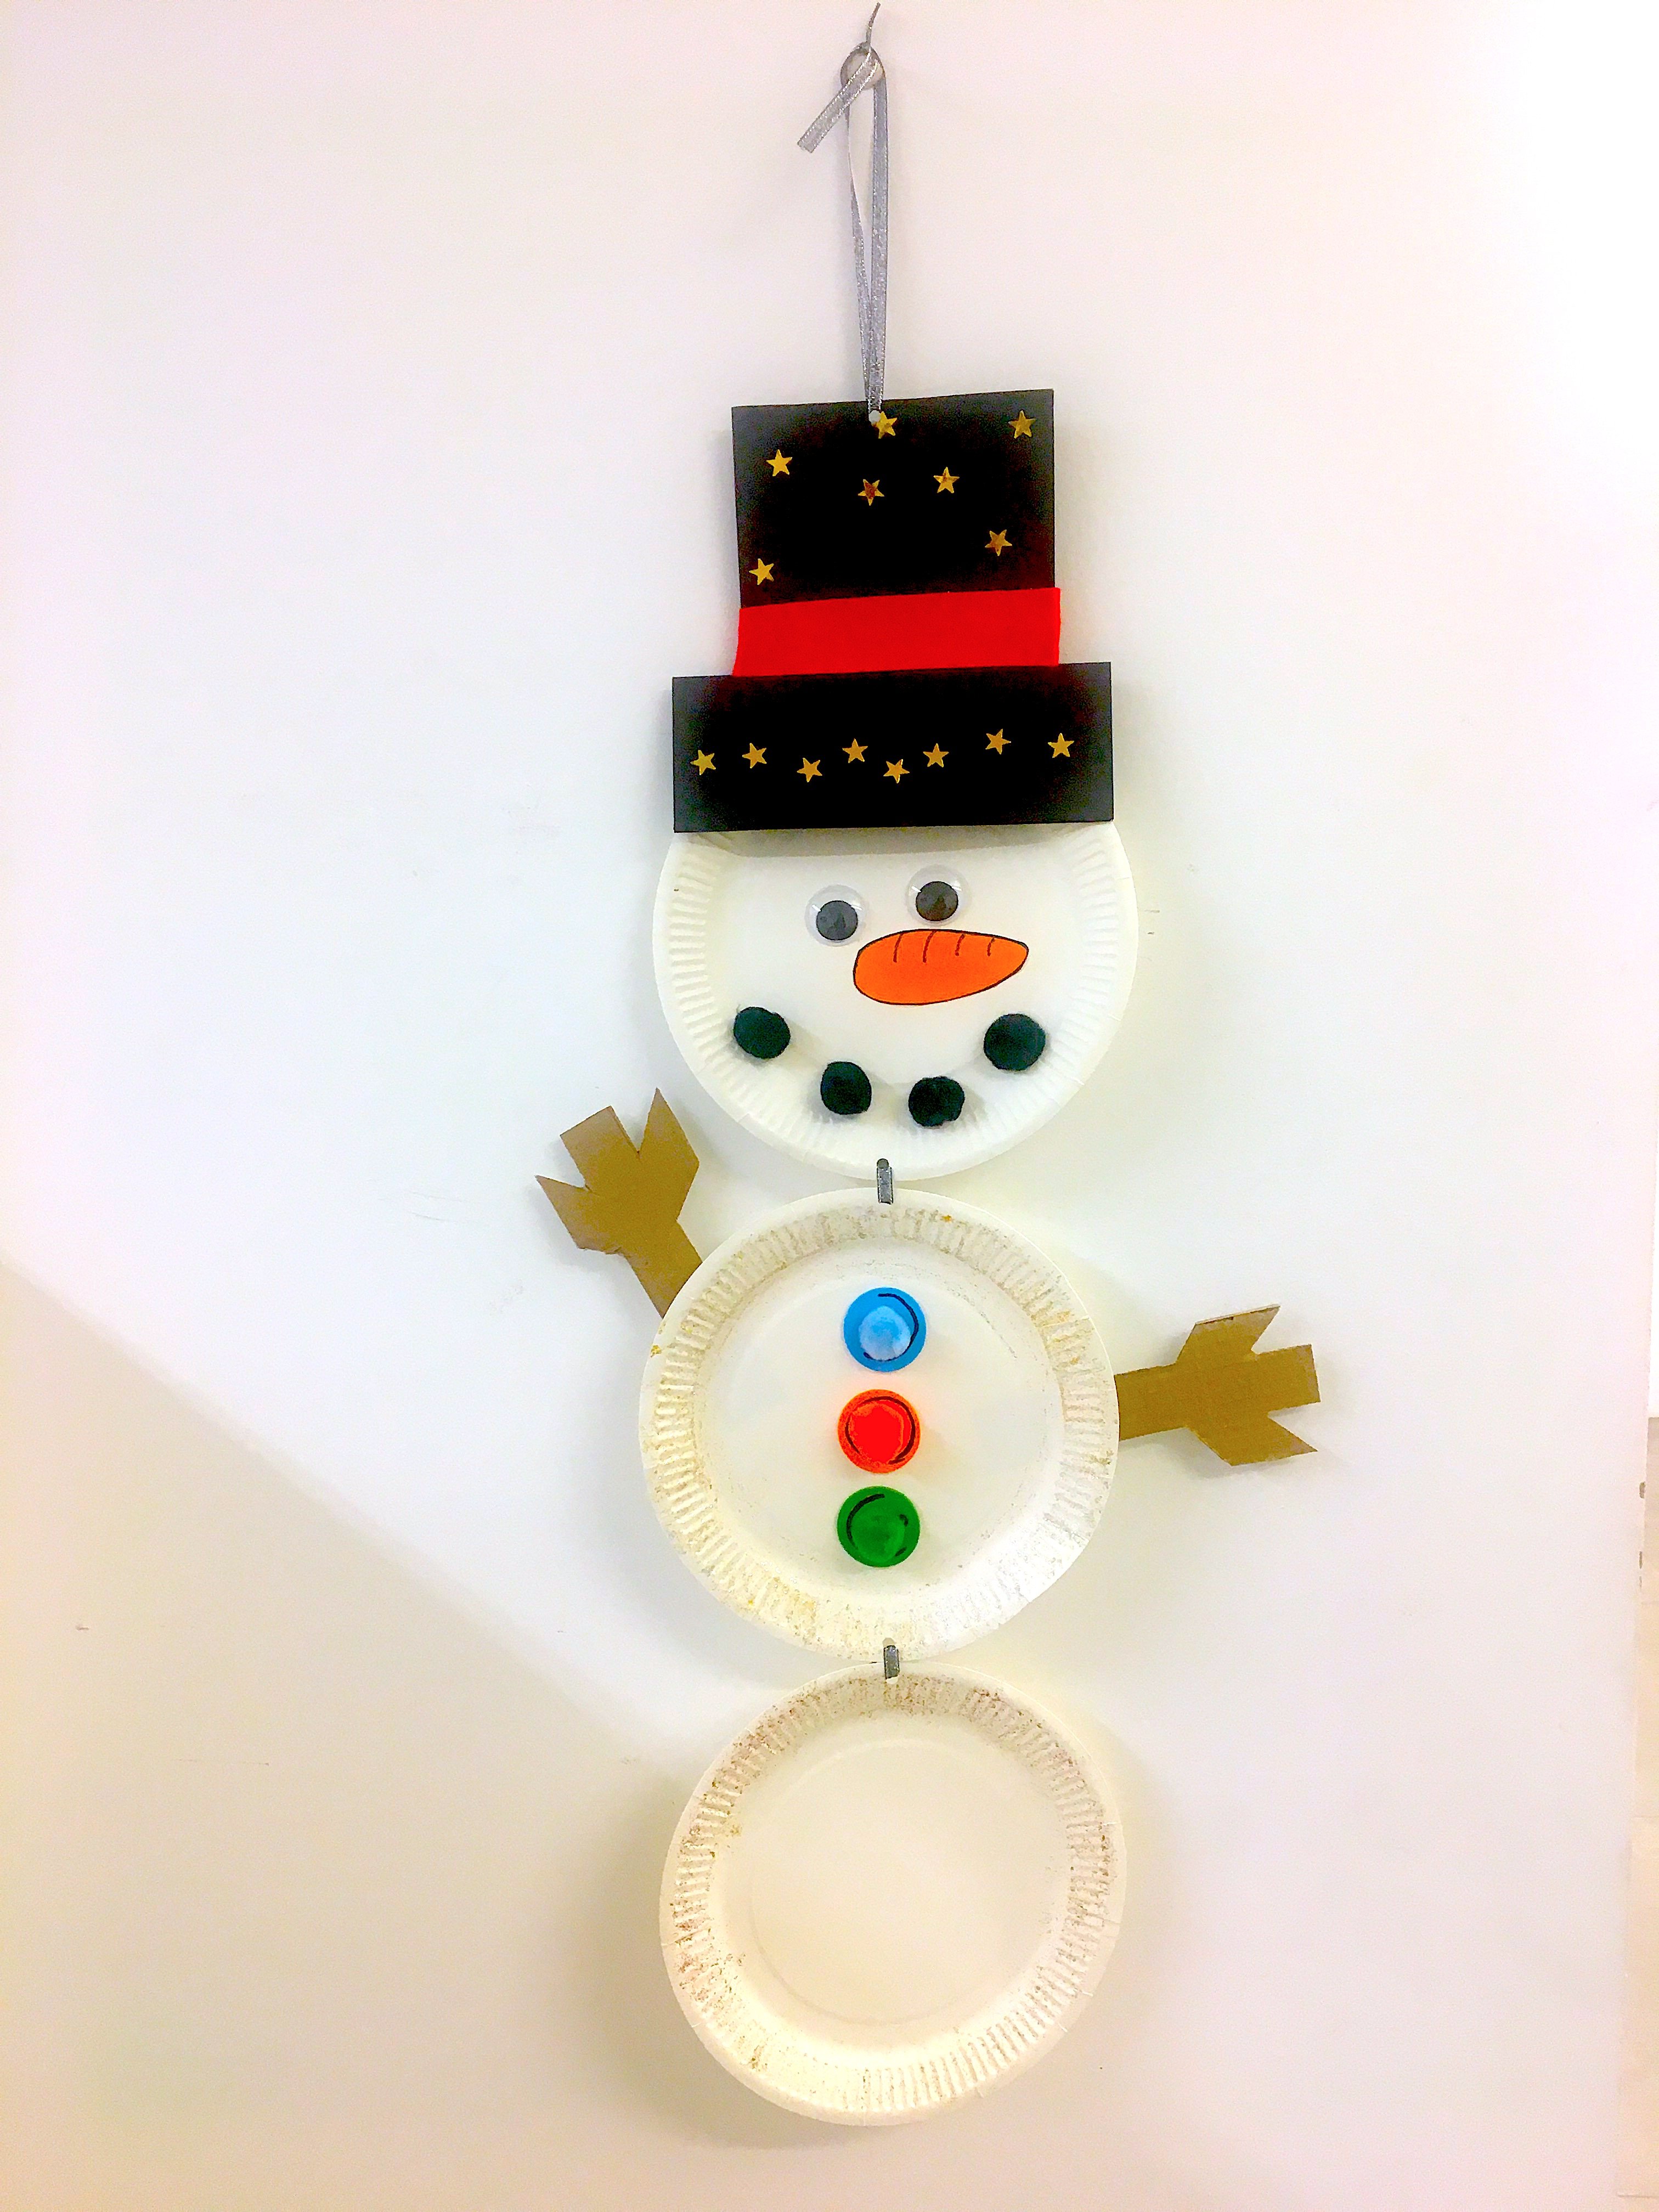 stick pom poms on the paper plate snowman